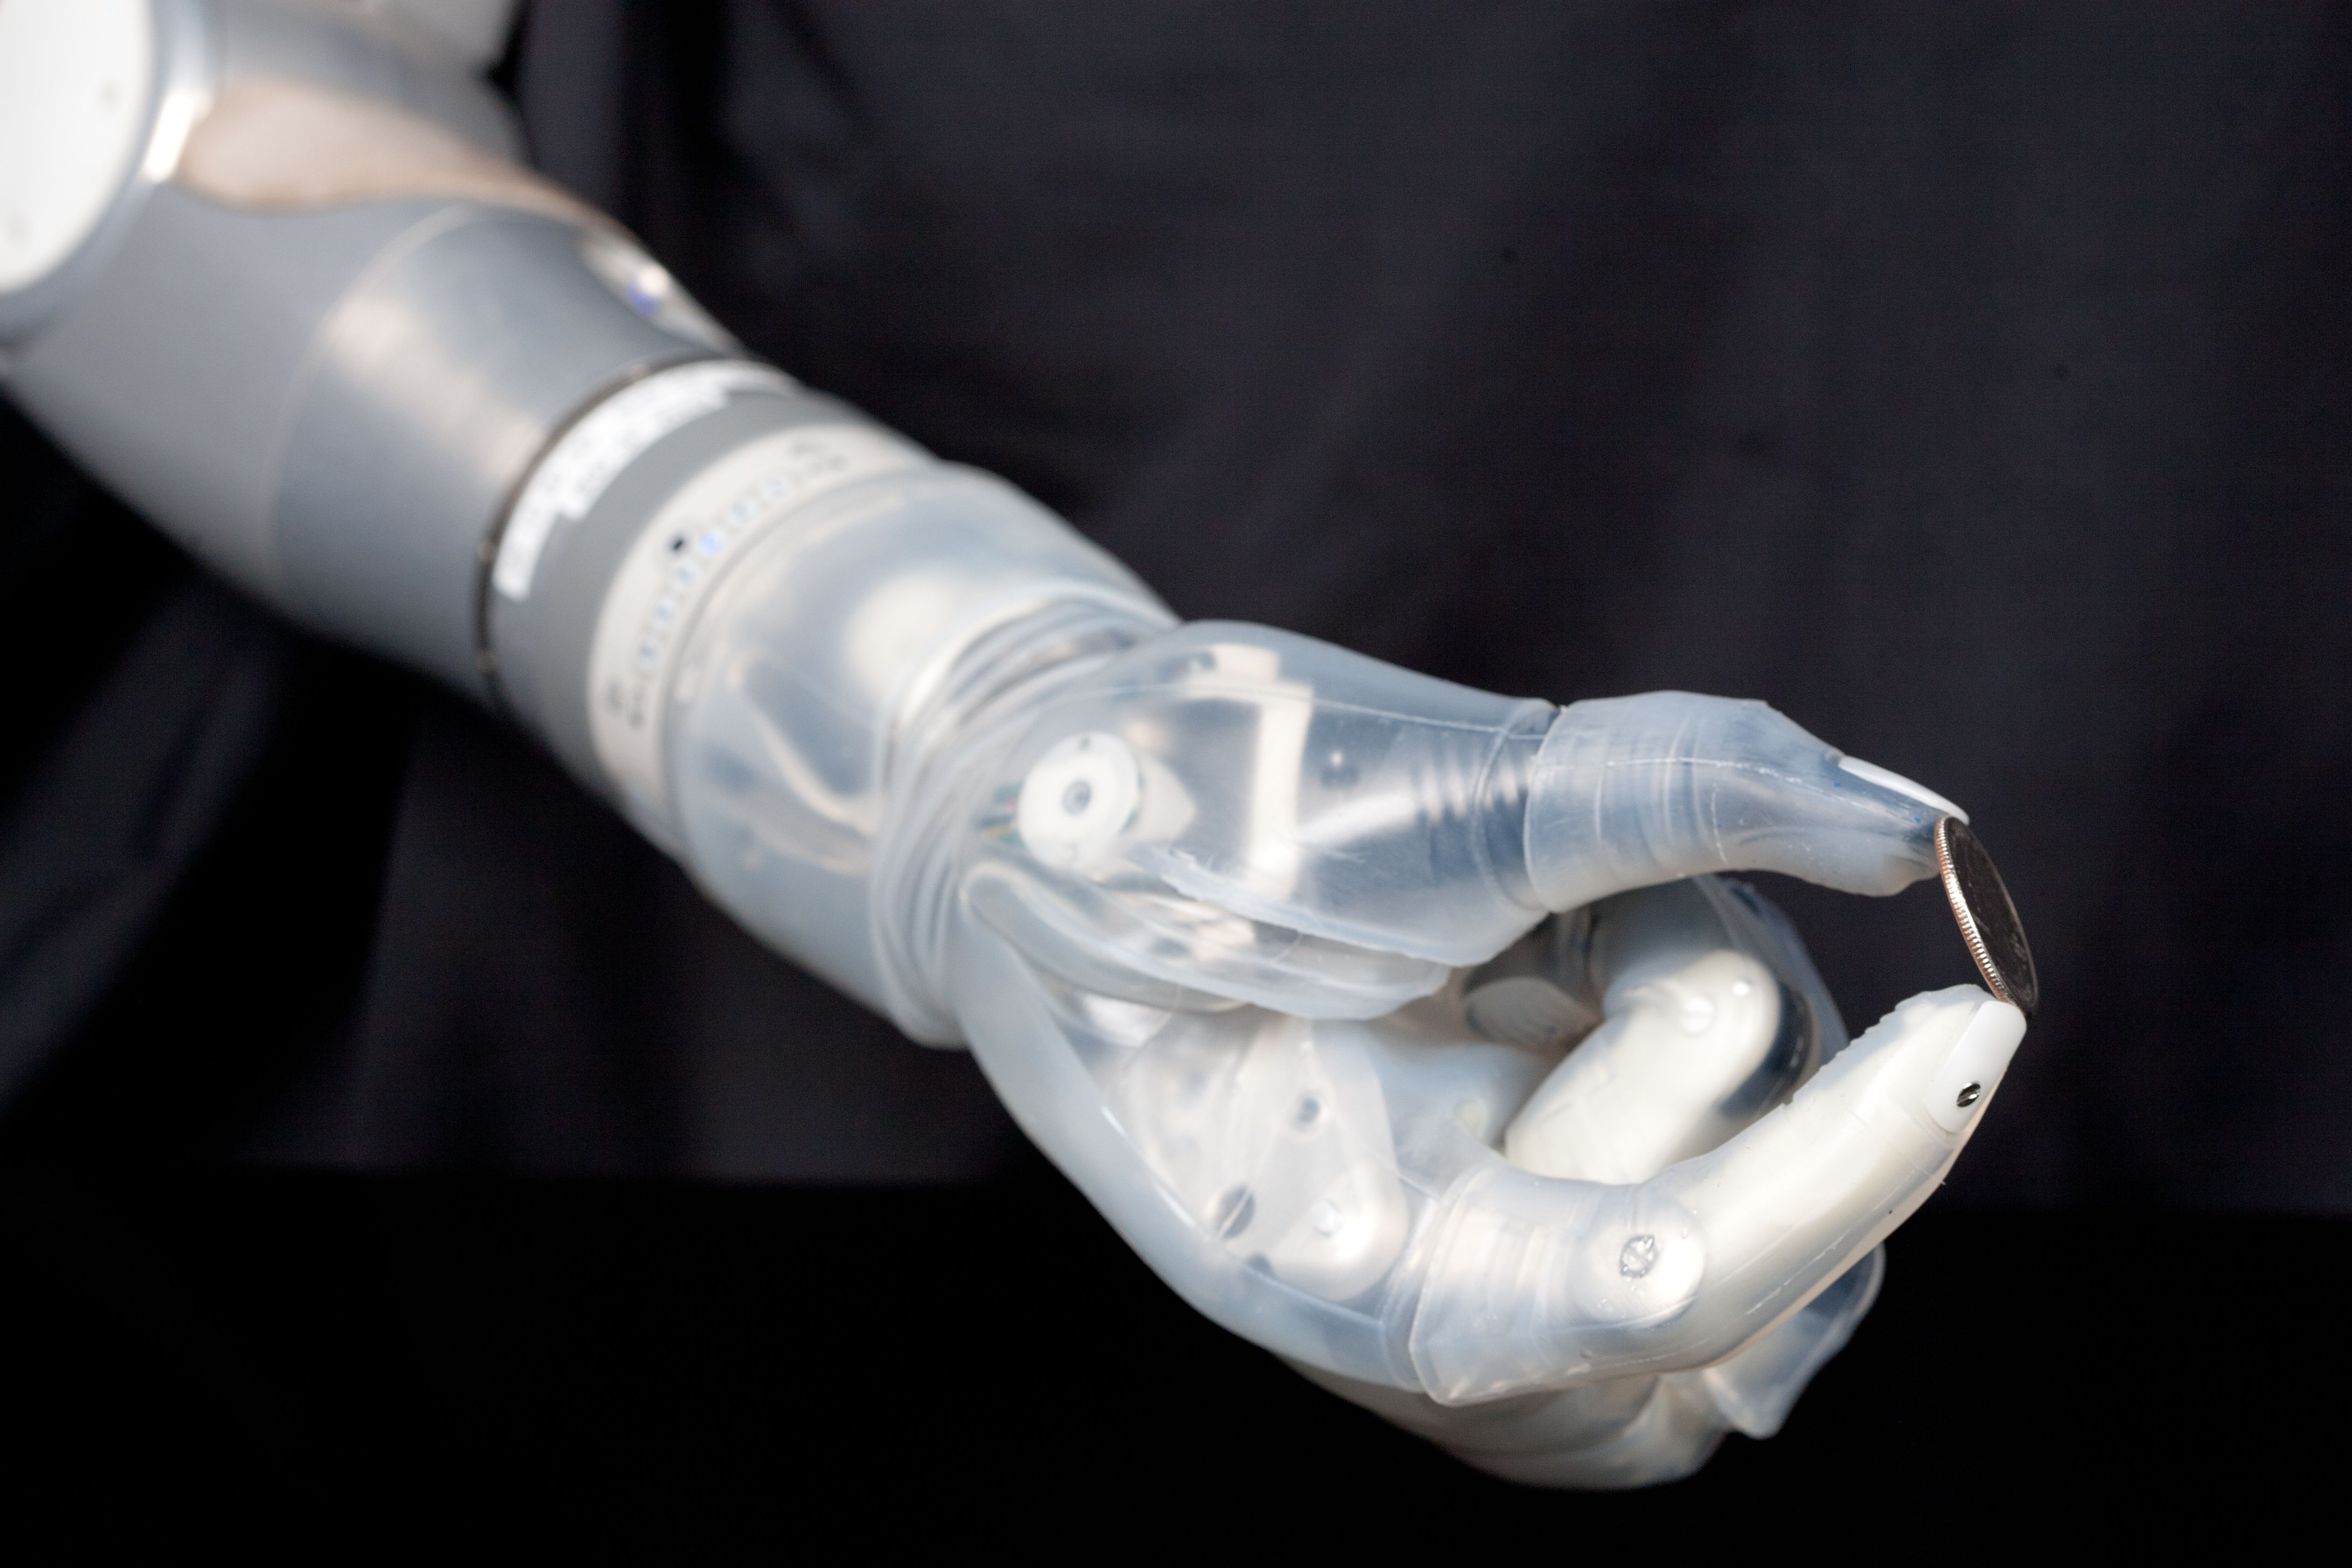 FDA approves 'Star Wars' bionic arm